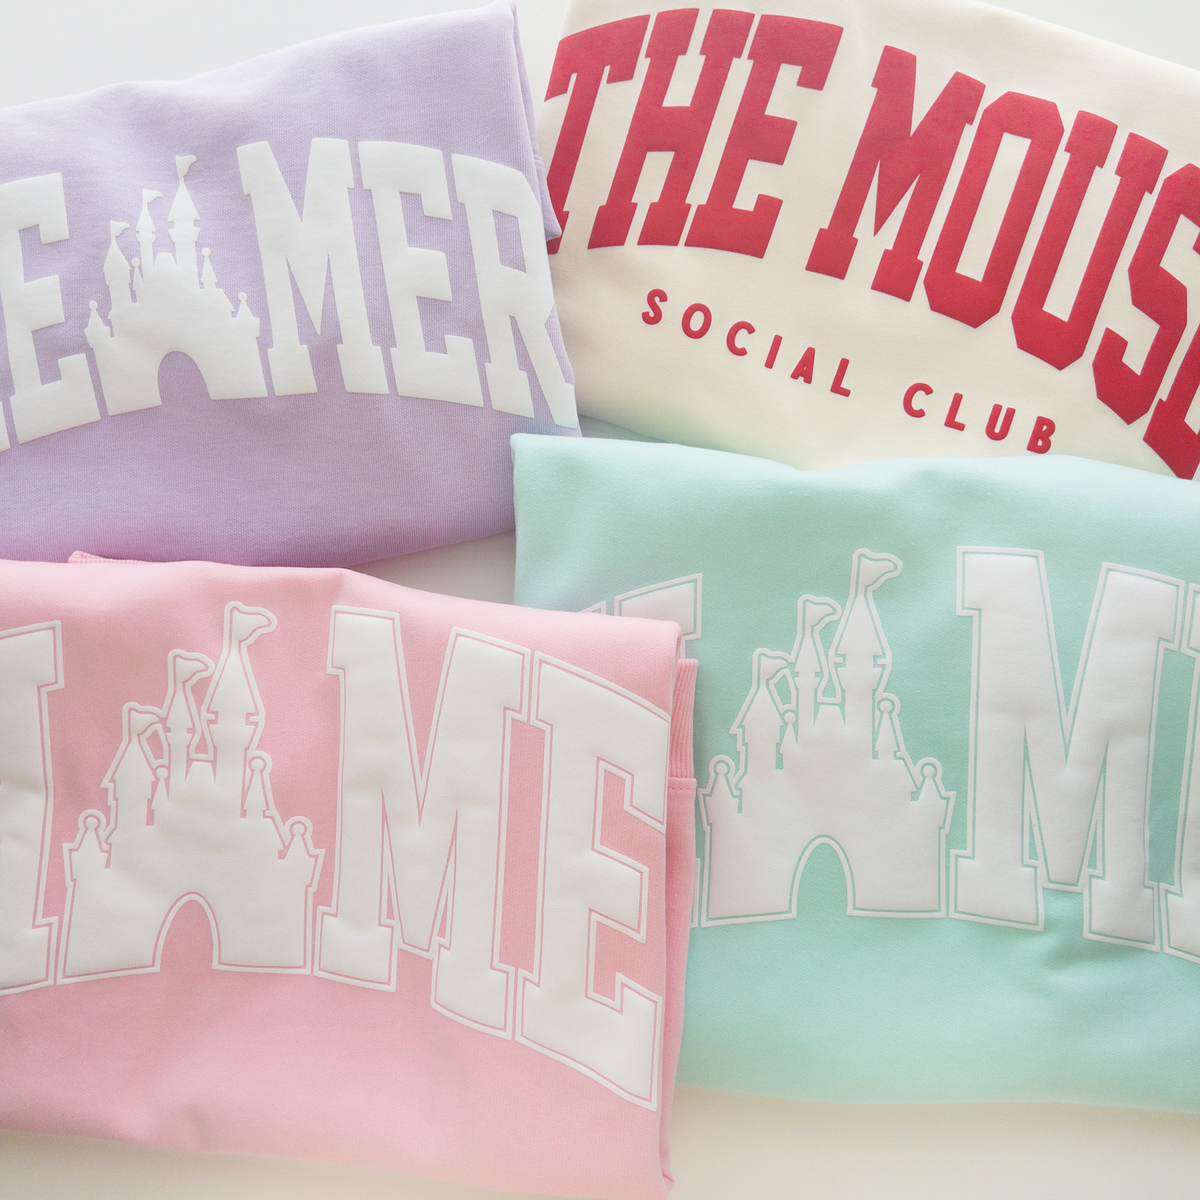 The Mouse Social Club Puffed Sweatshirt